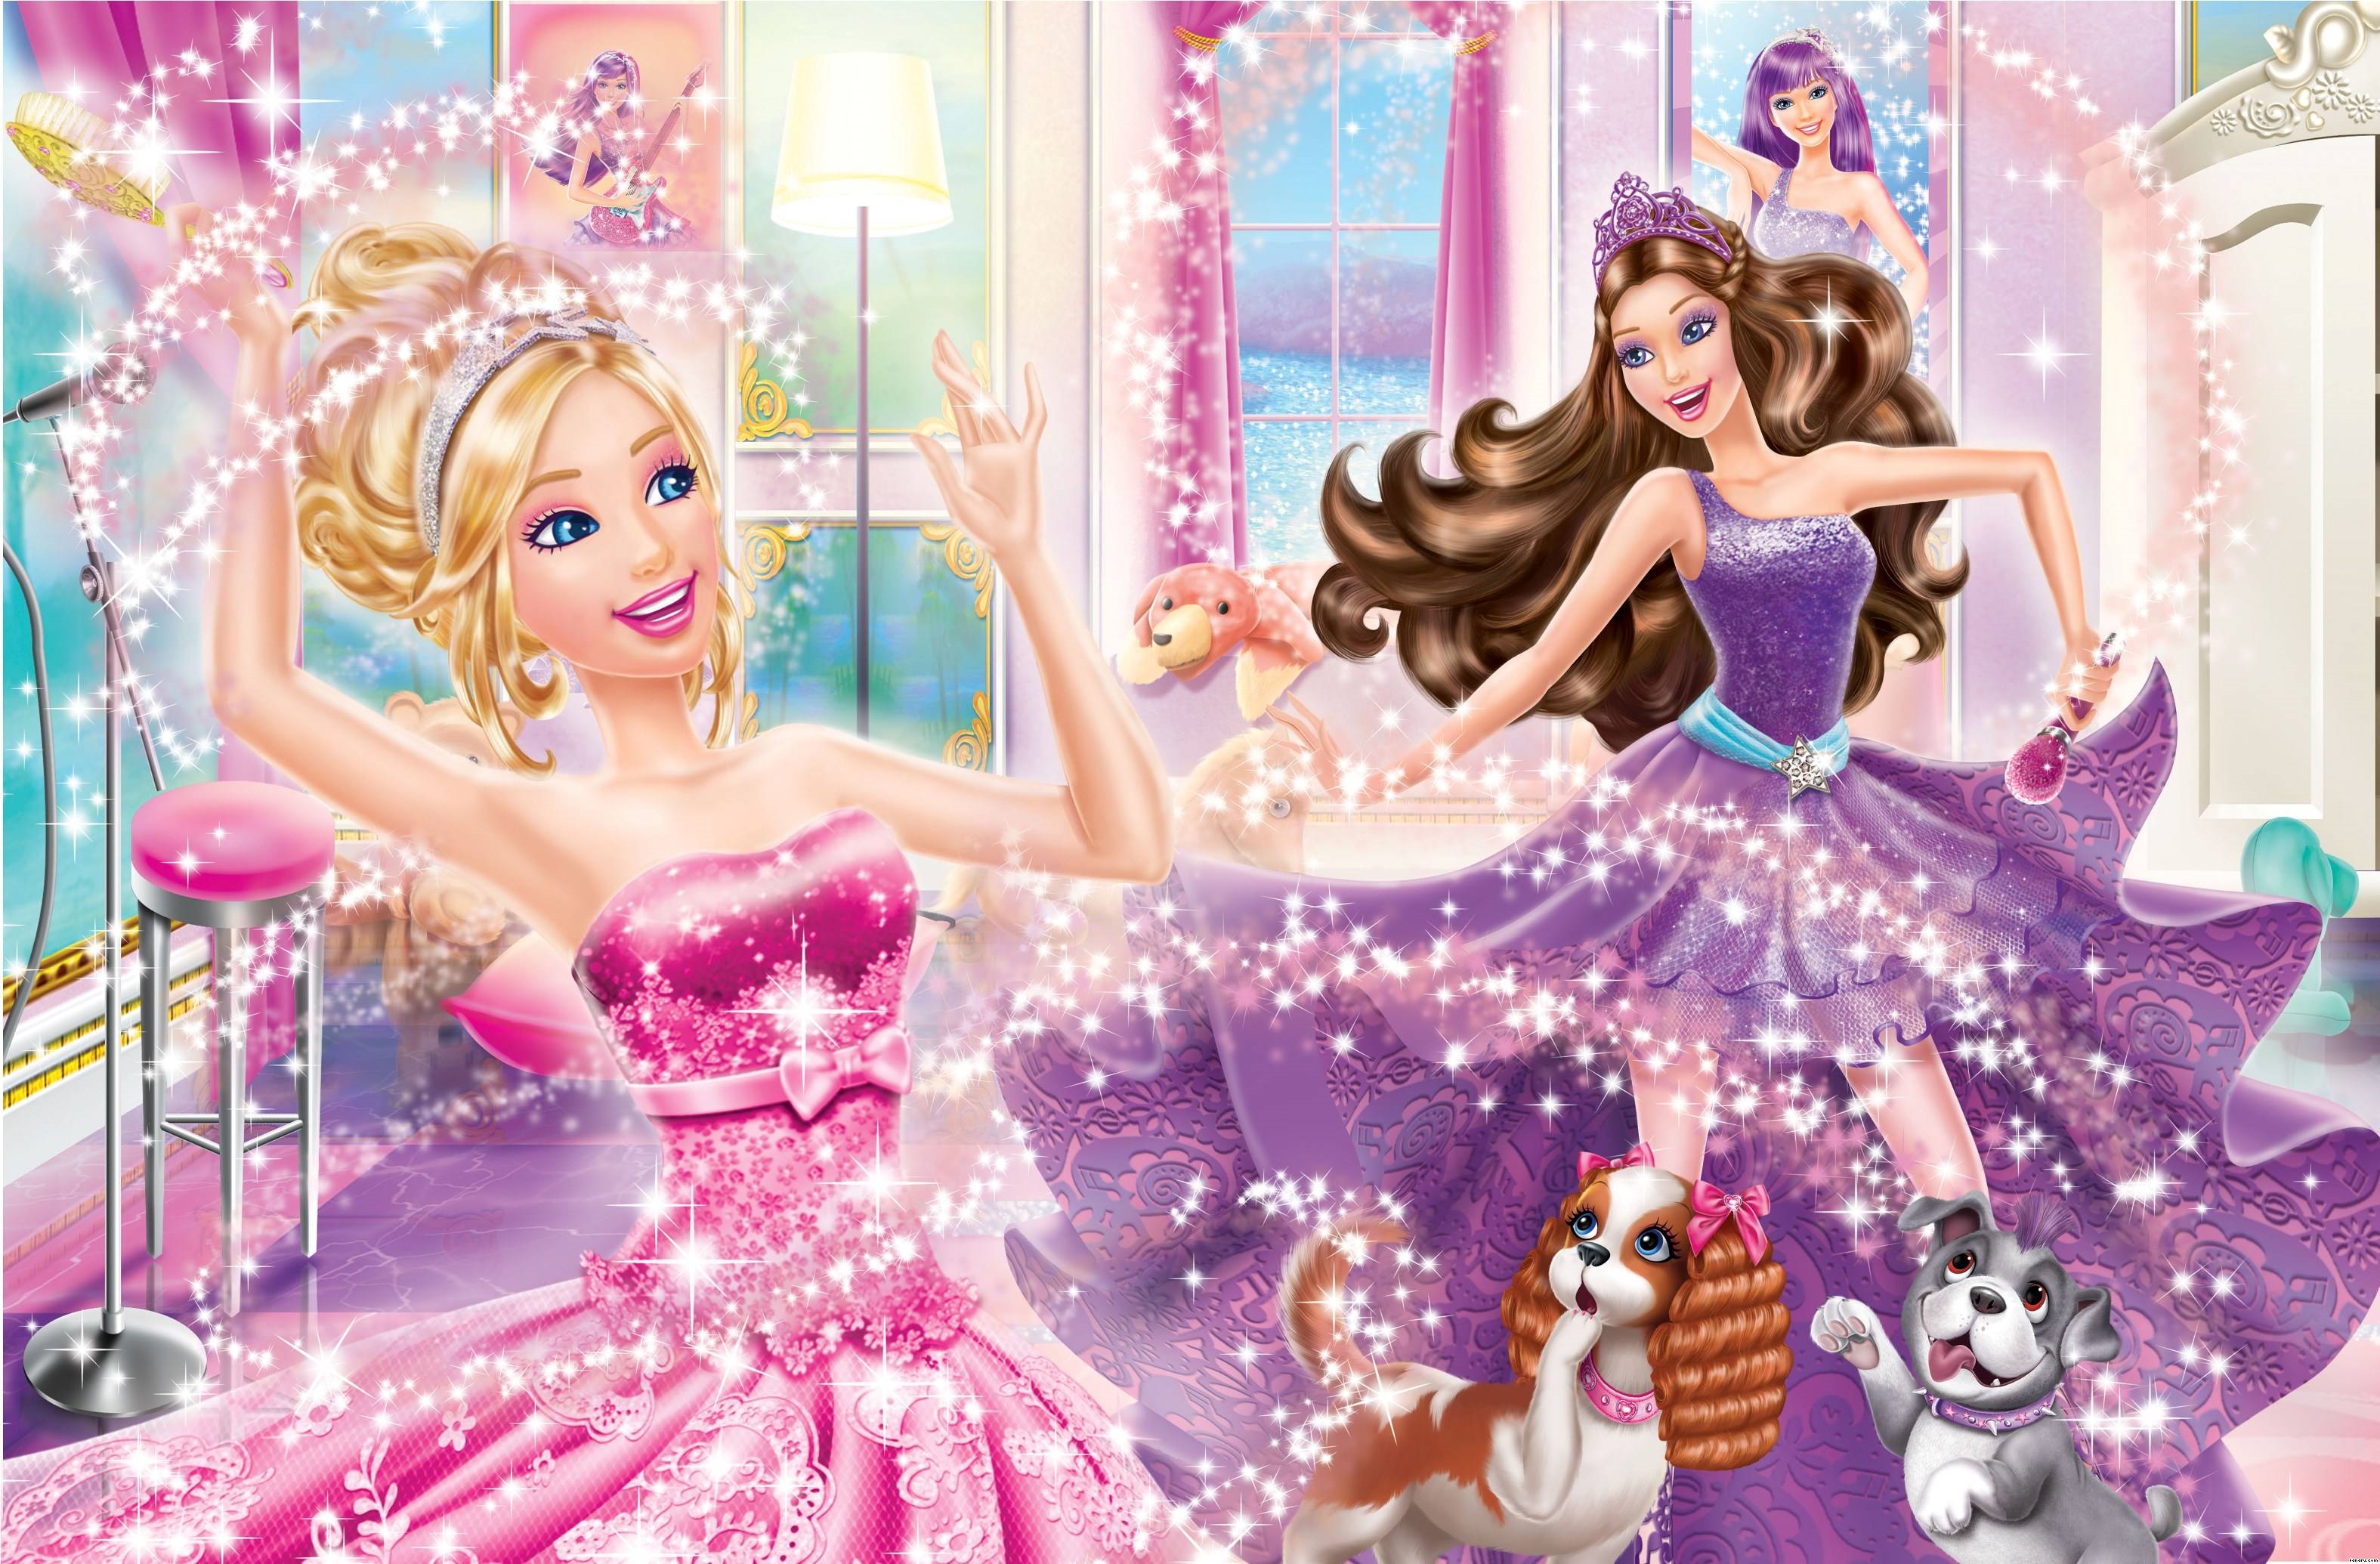 Barbie: The Princess & the Popstar (DVD) - image 5 of 5